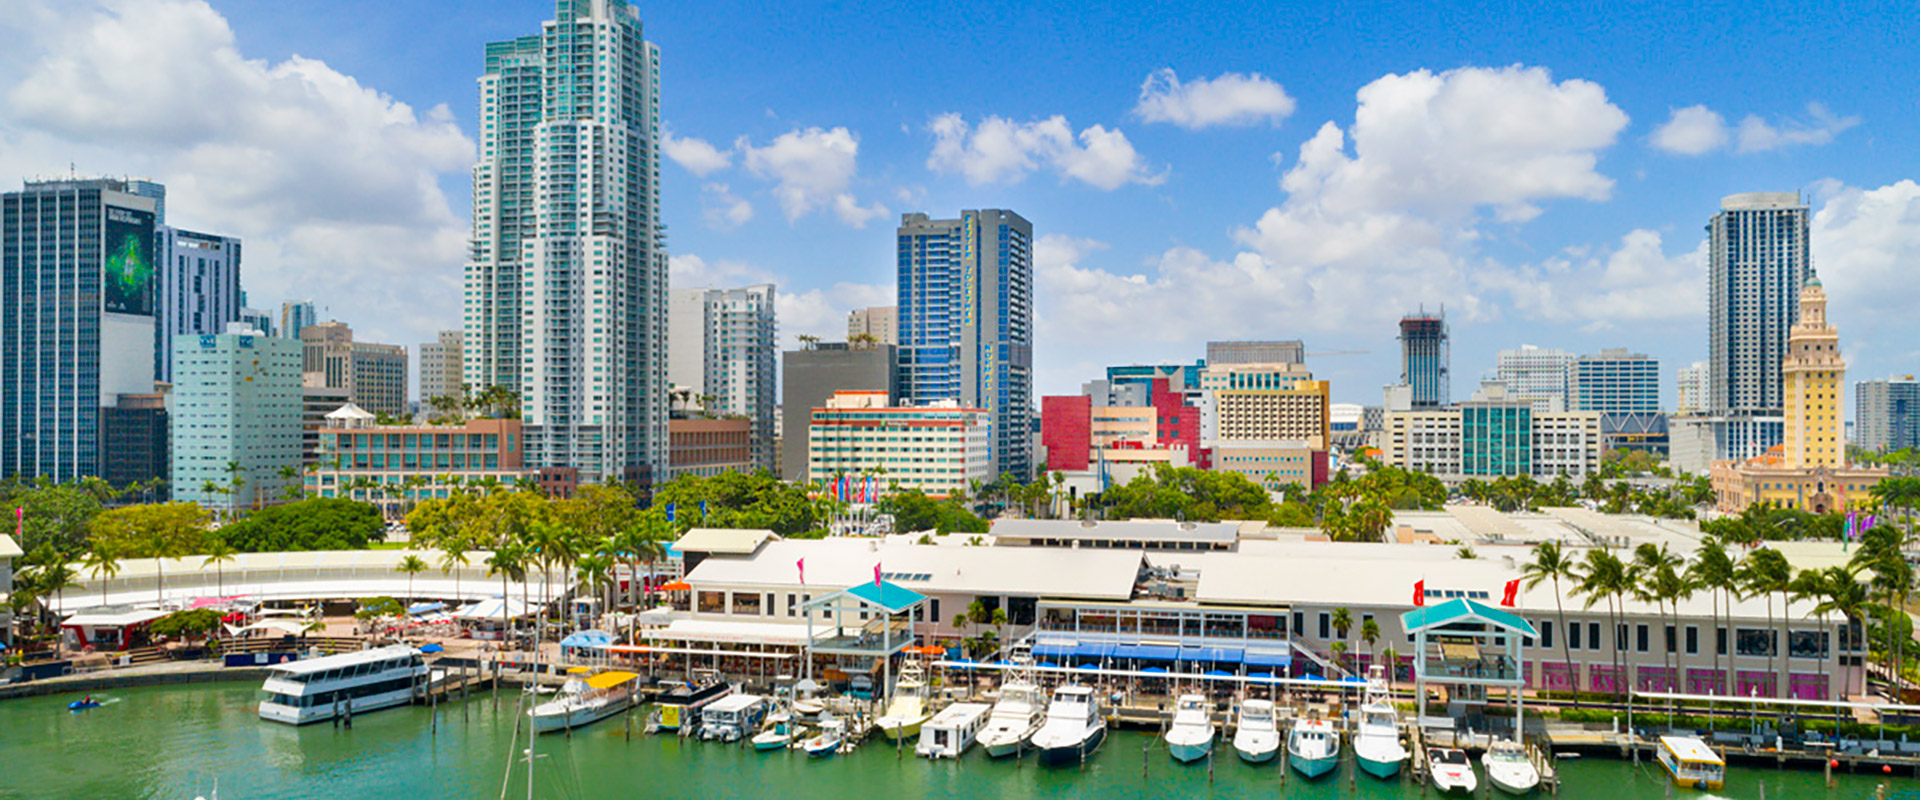 Bayside Marketplace in Miami Skyline